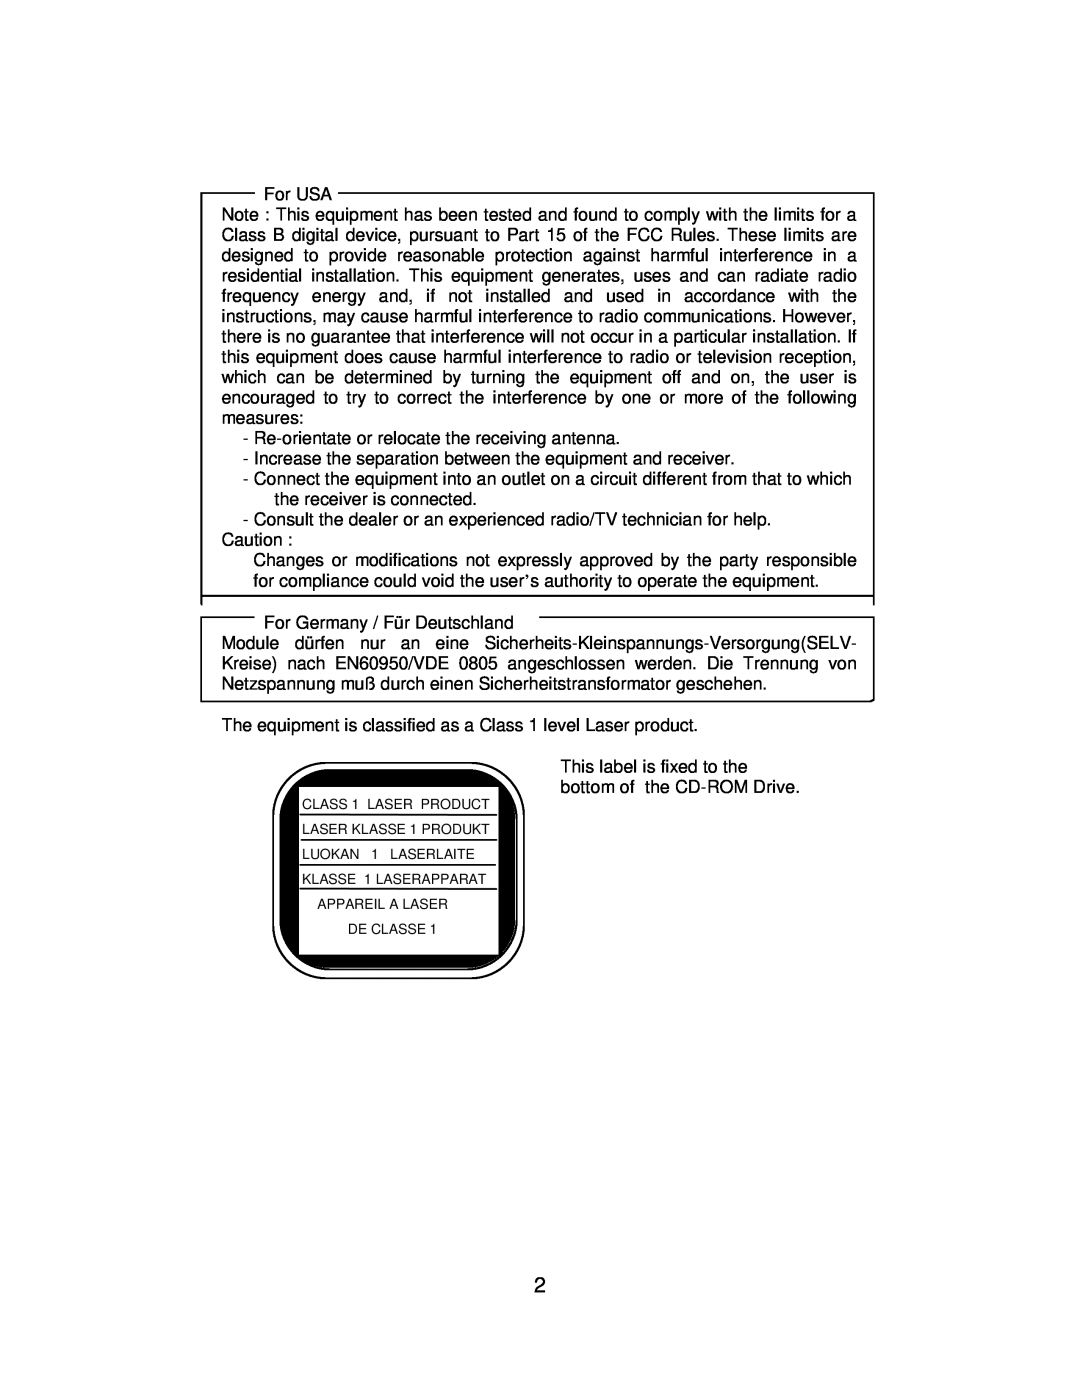 Hitachi CDR-8130 instruction manual For USA 